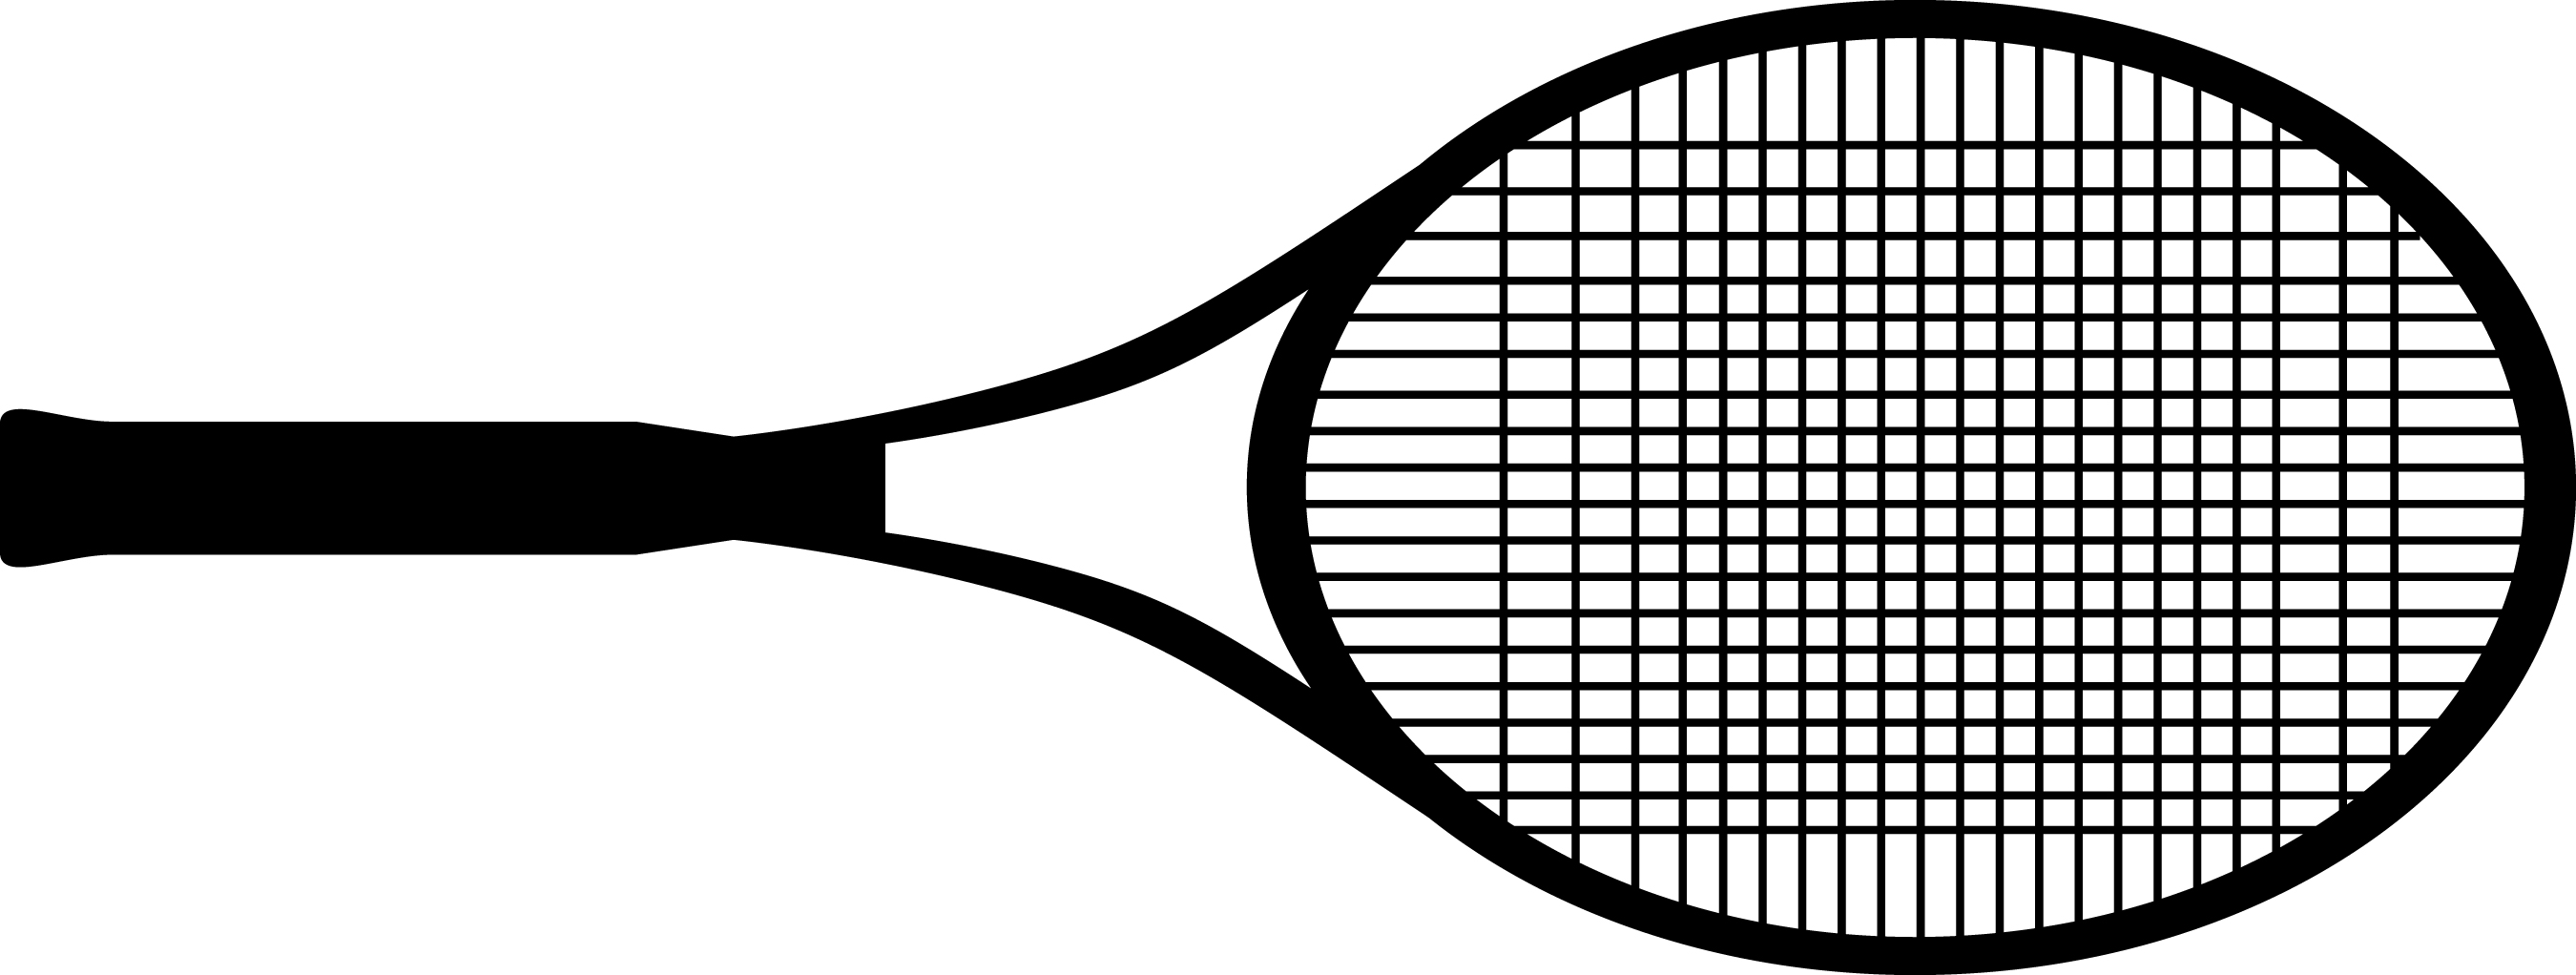 Tennis Racket Silhouette images & pictures - NearPics